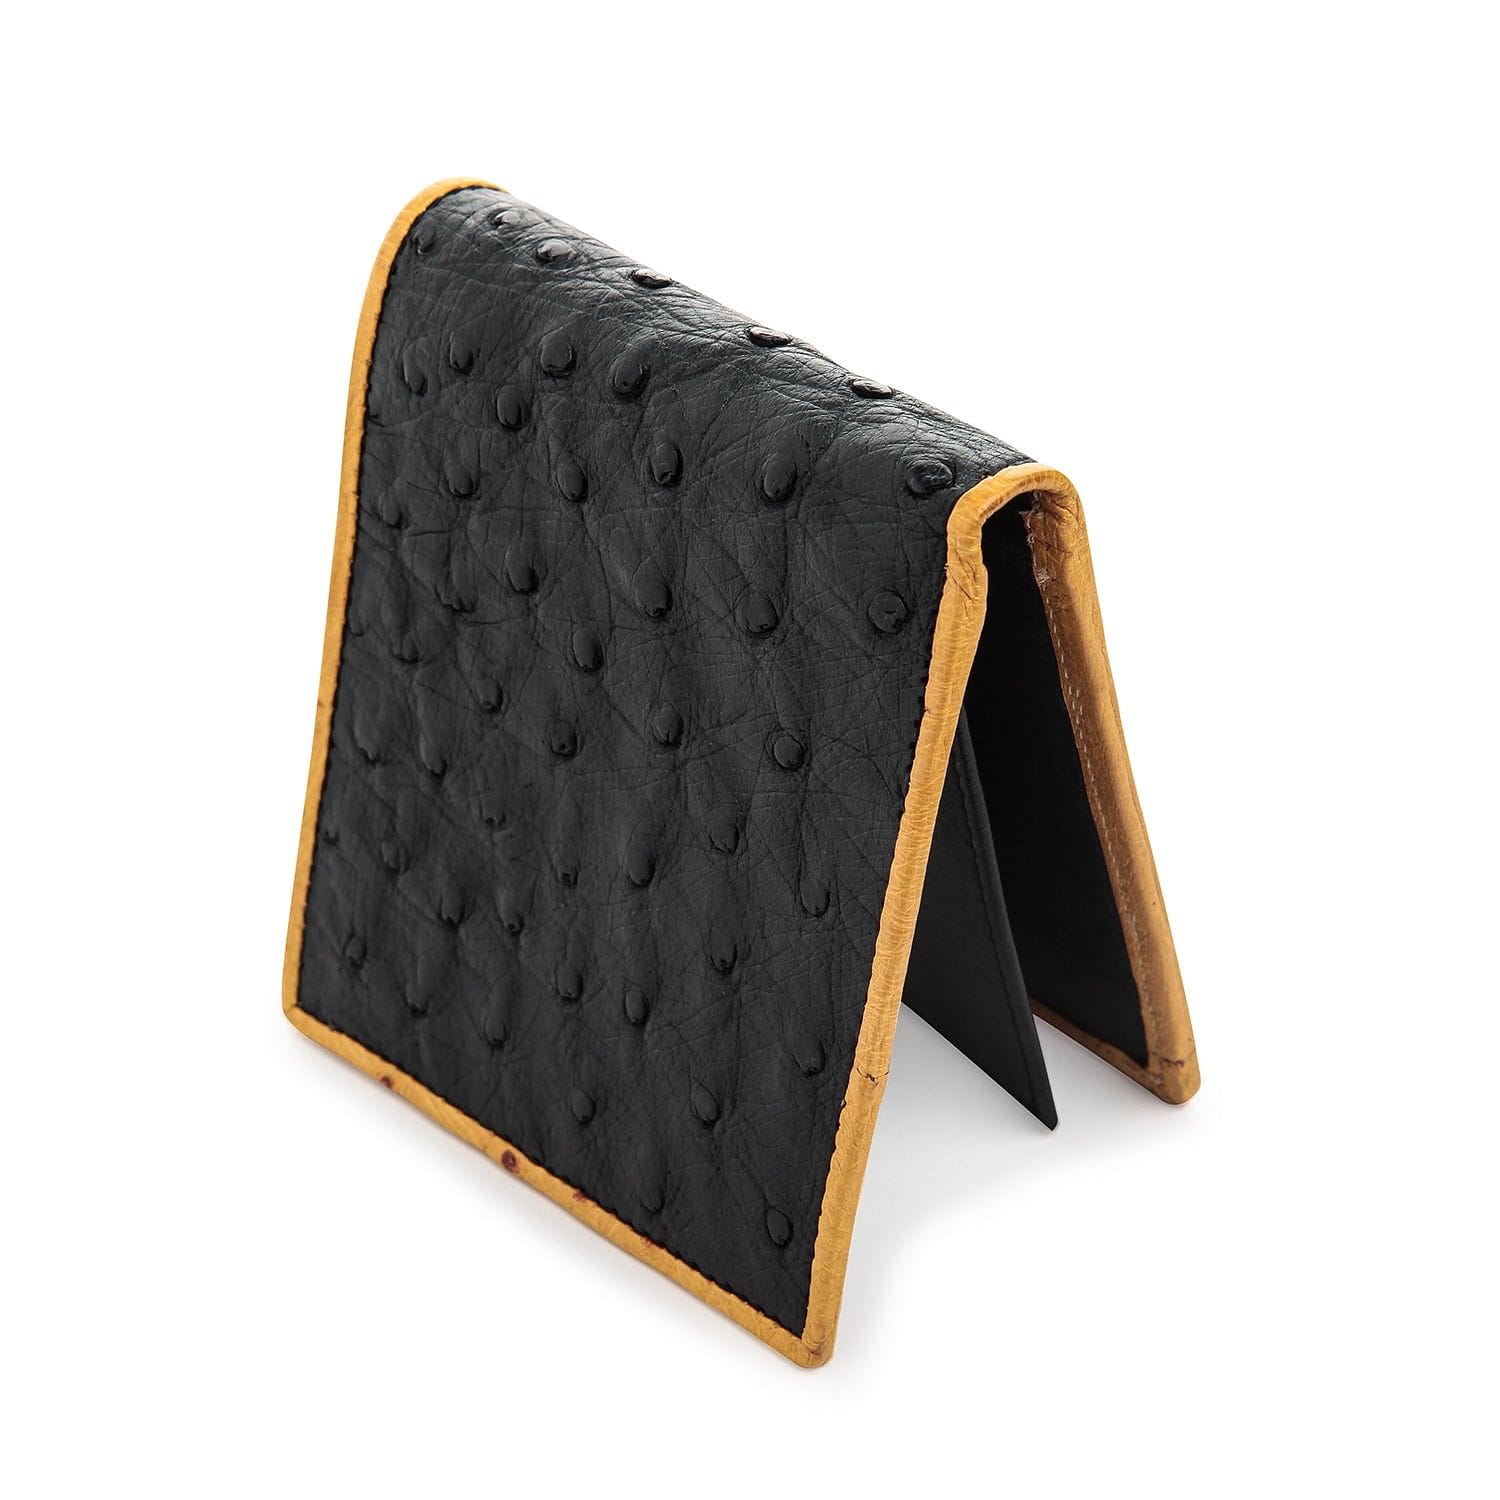 Male Handcrafted Premium Black Ostrich Leg Leather Wallet by Rakshantra